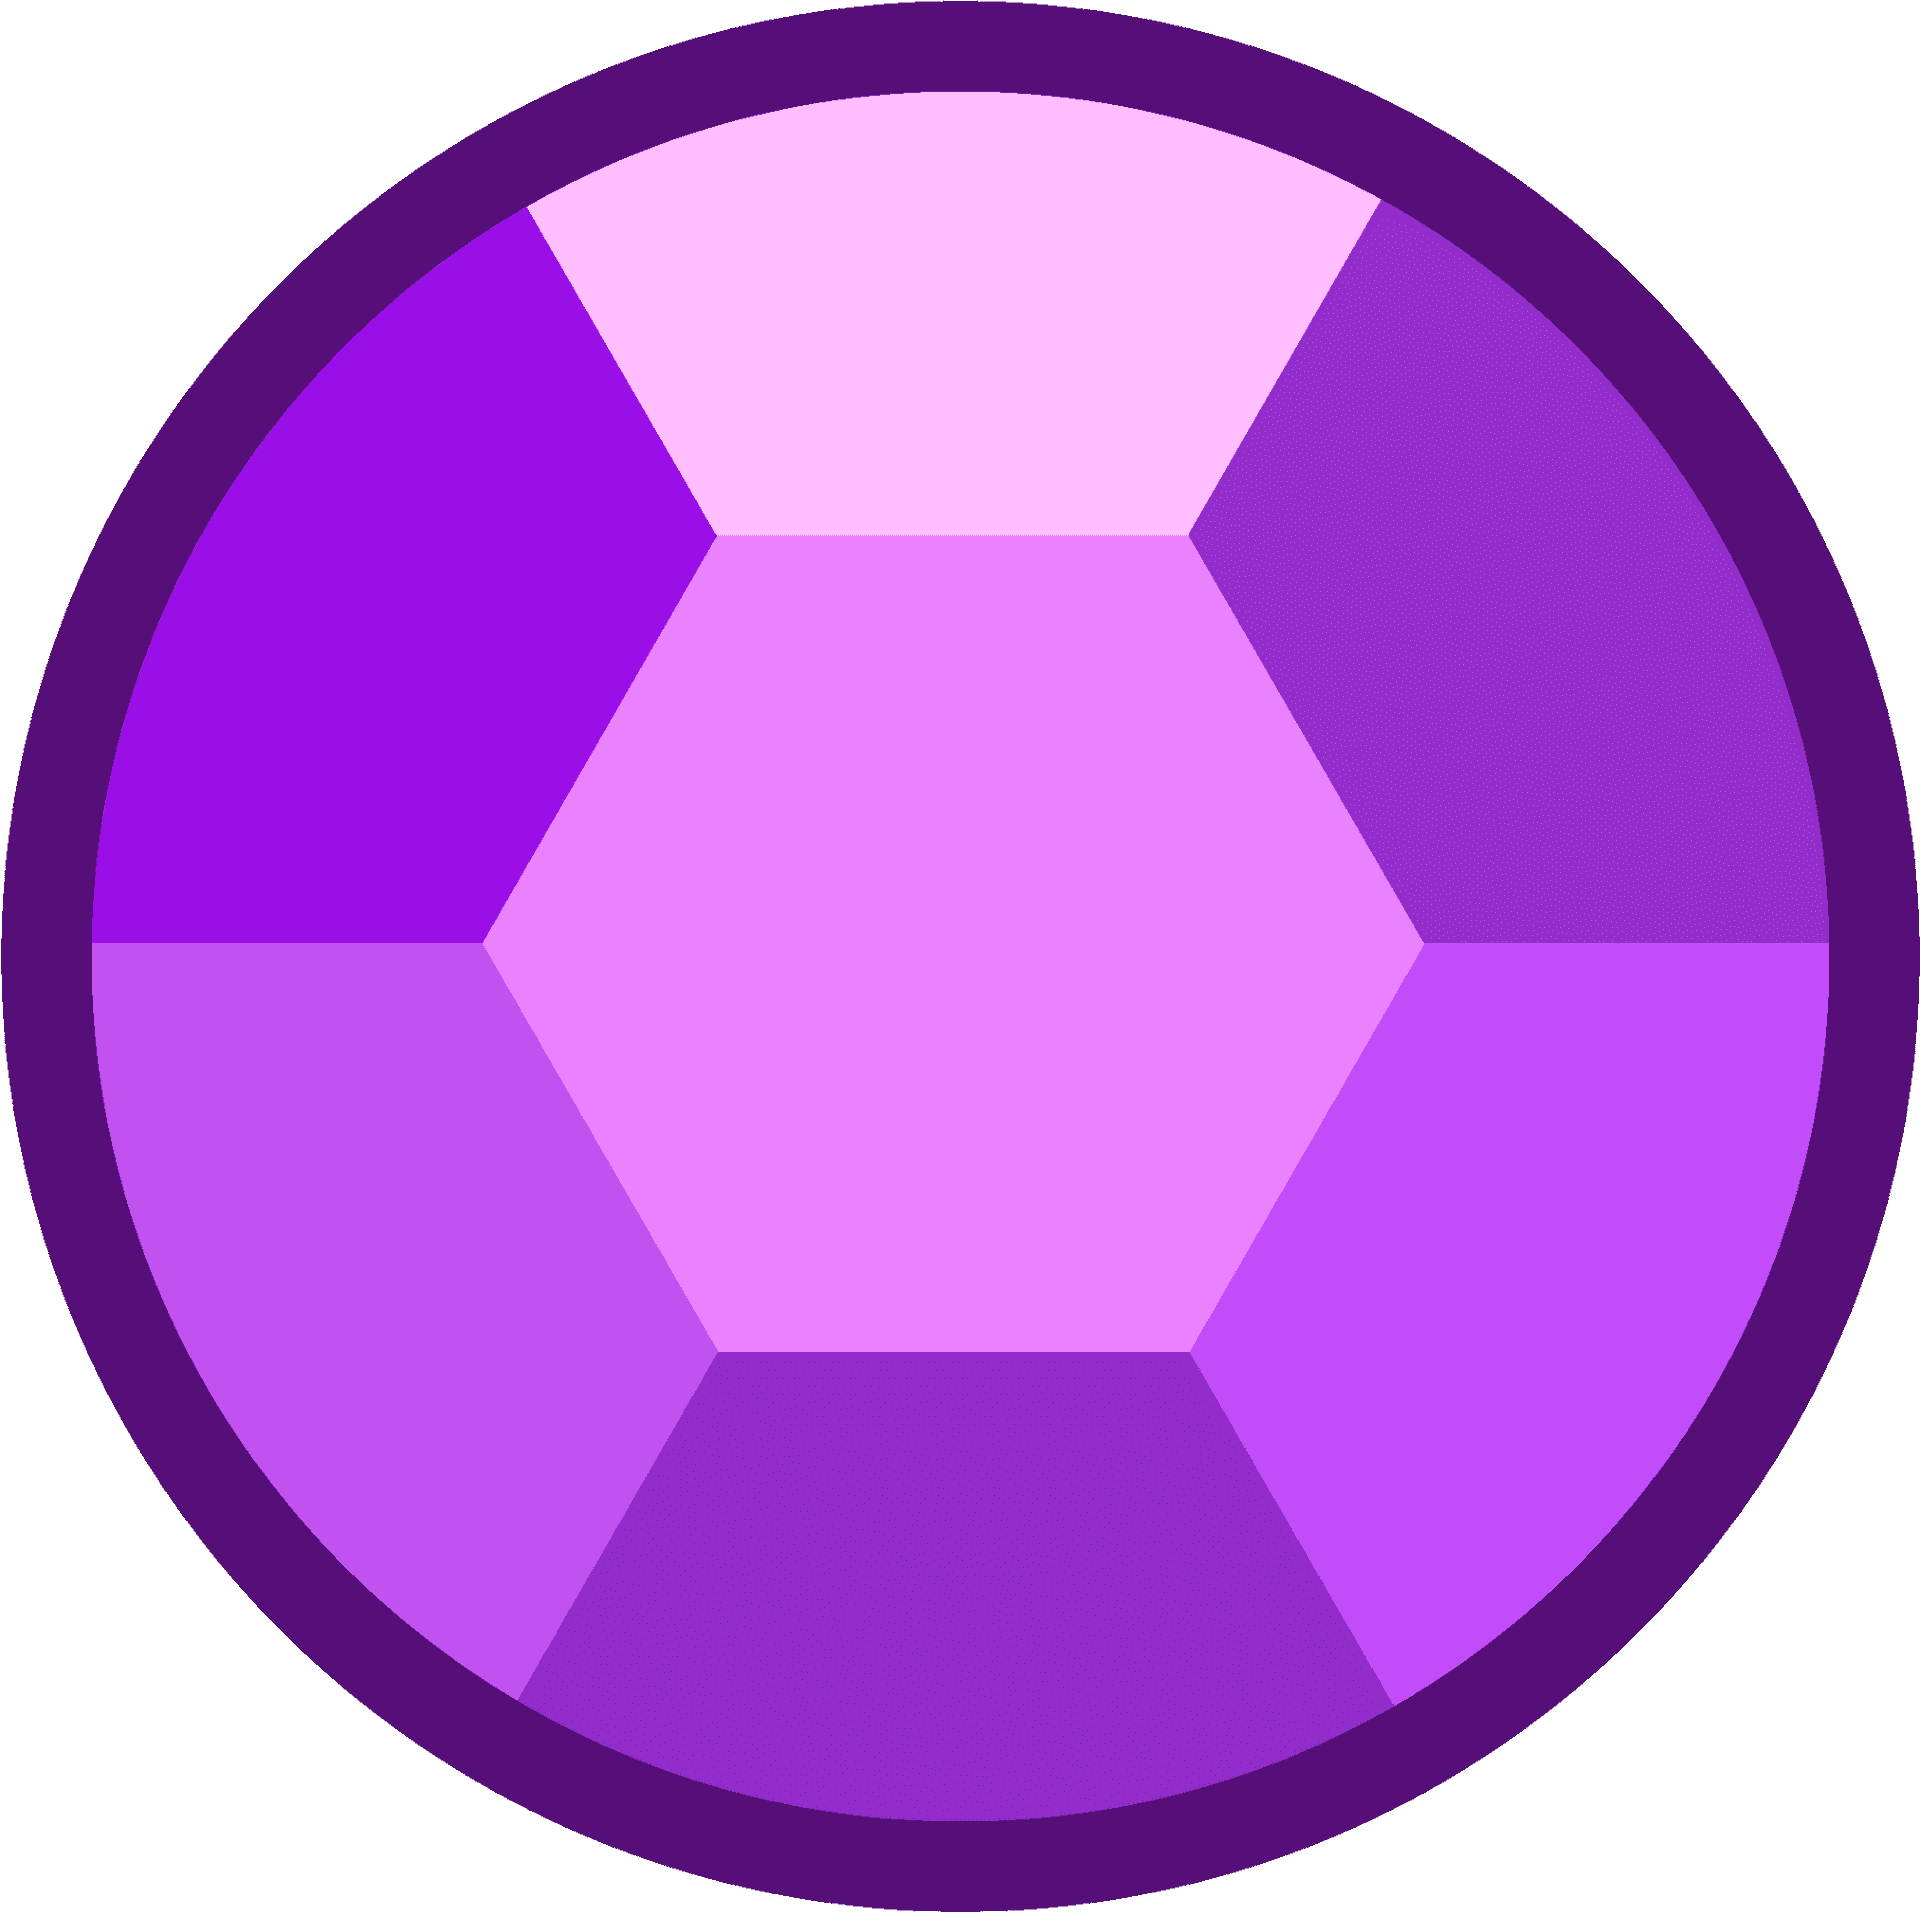 Purple Gemstone Graphic PNG image